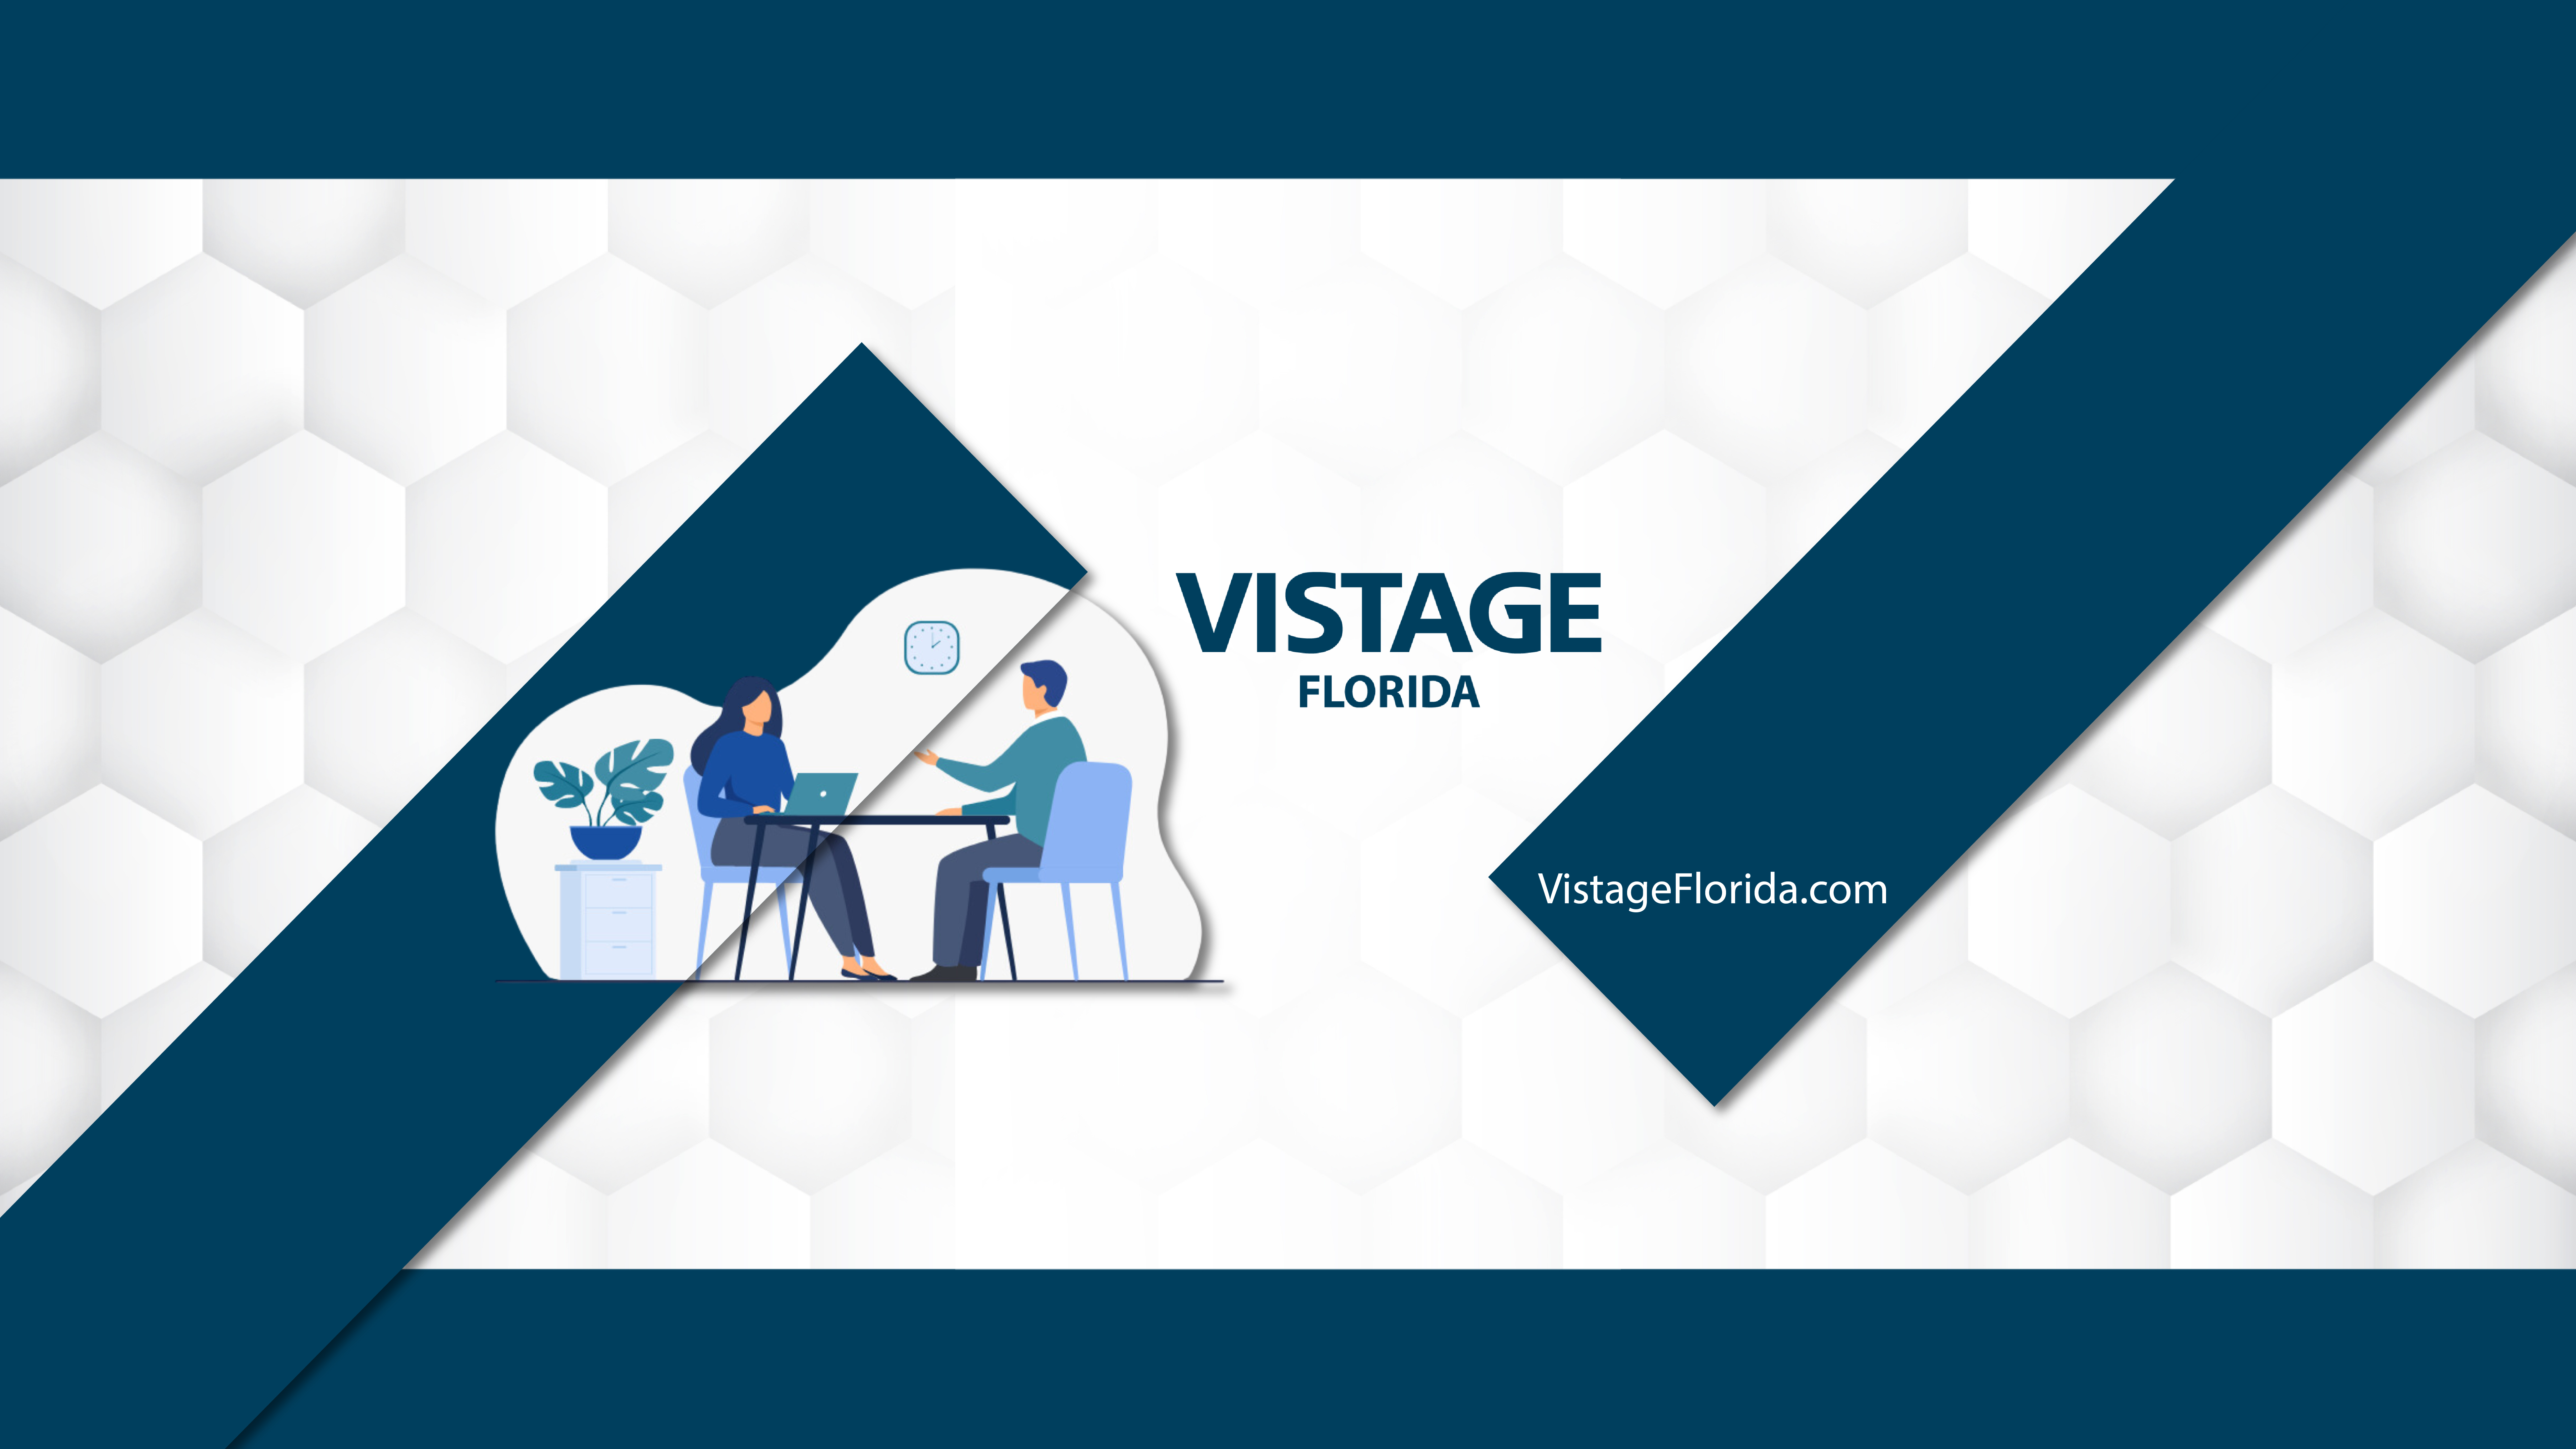 Vistage Florida Cover Image